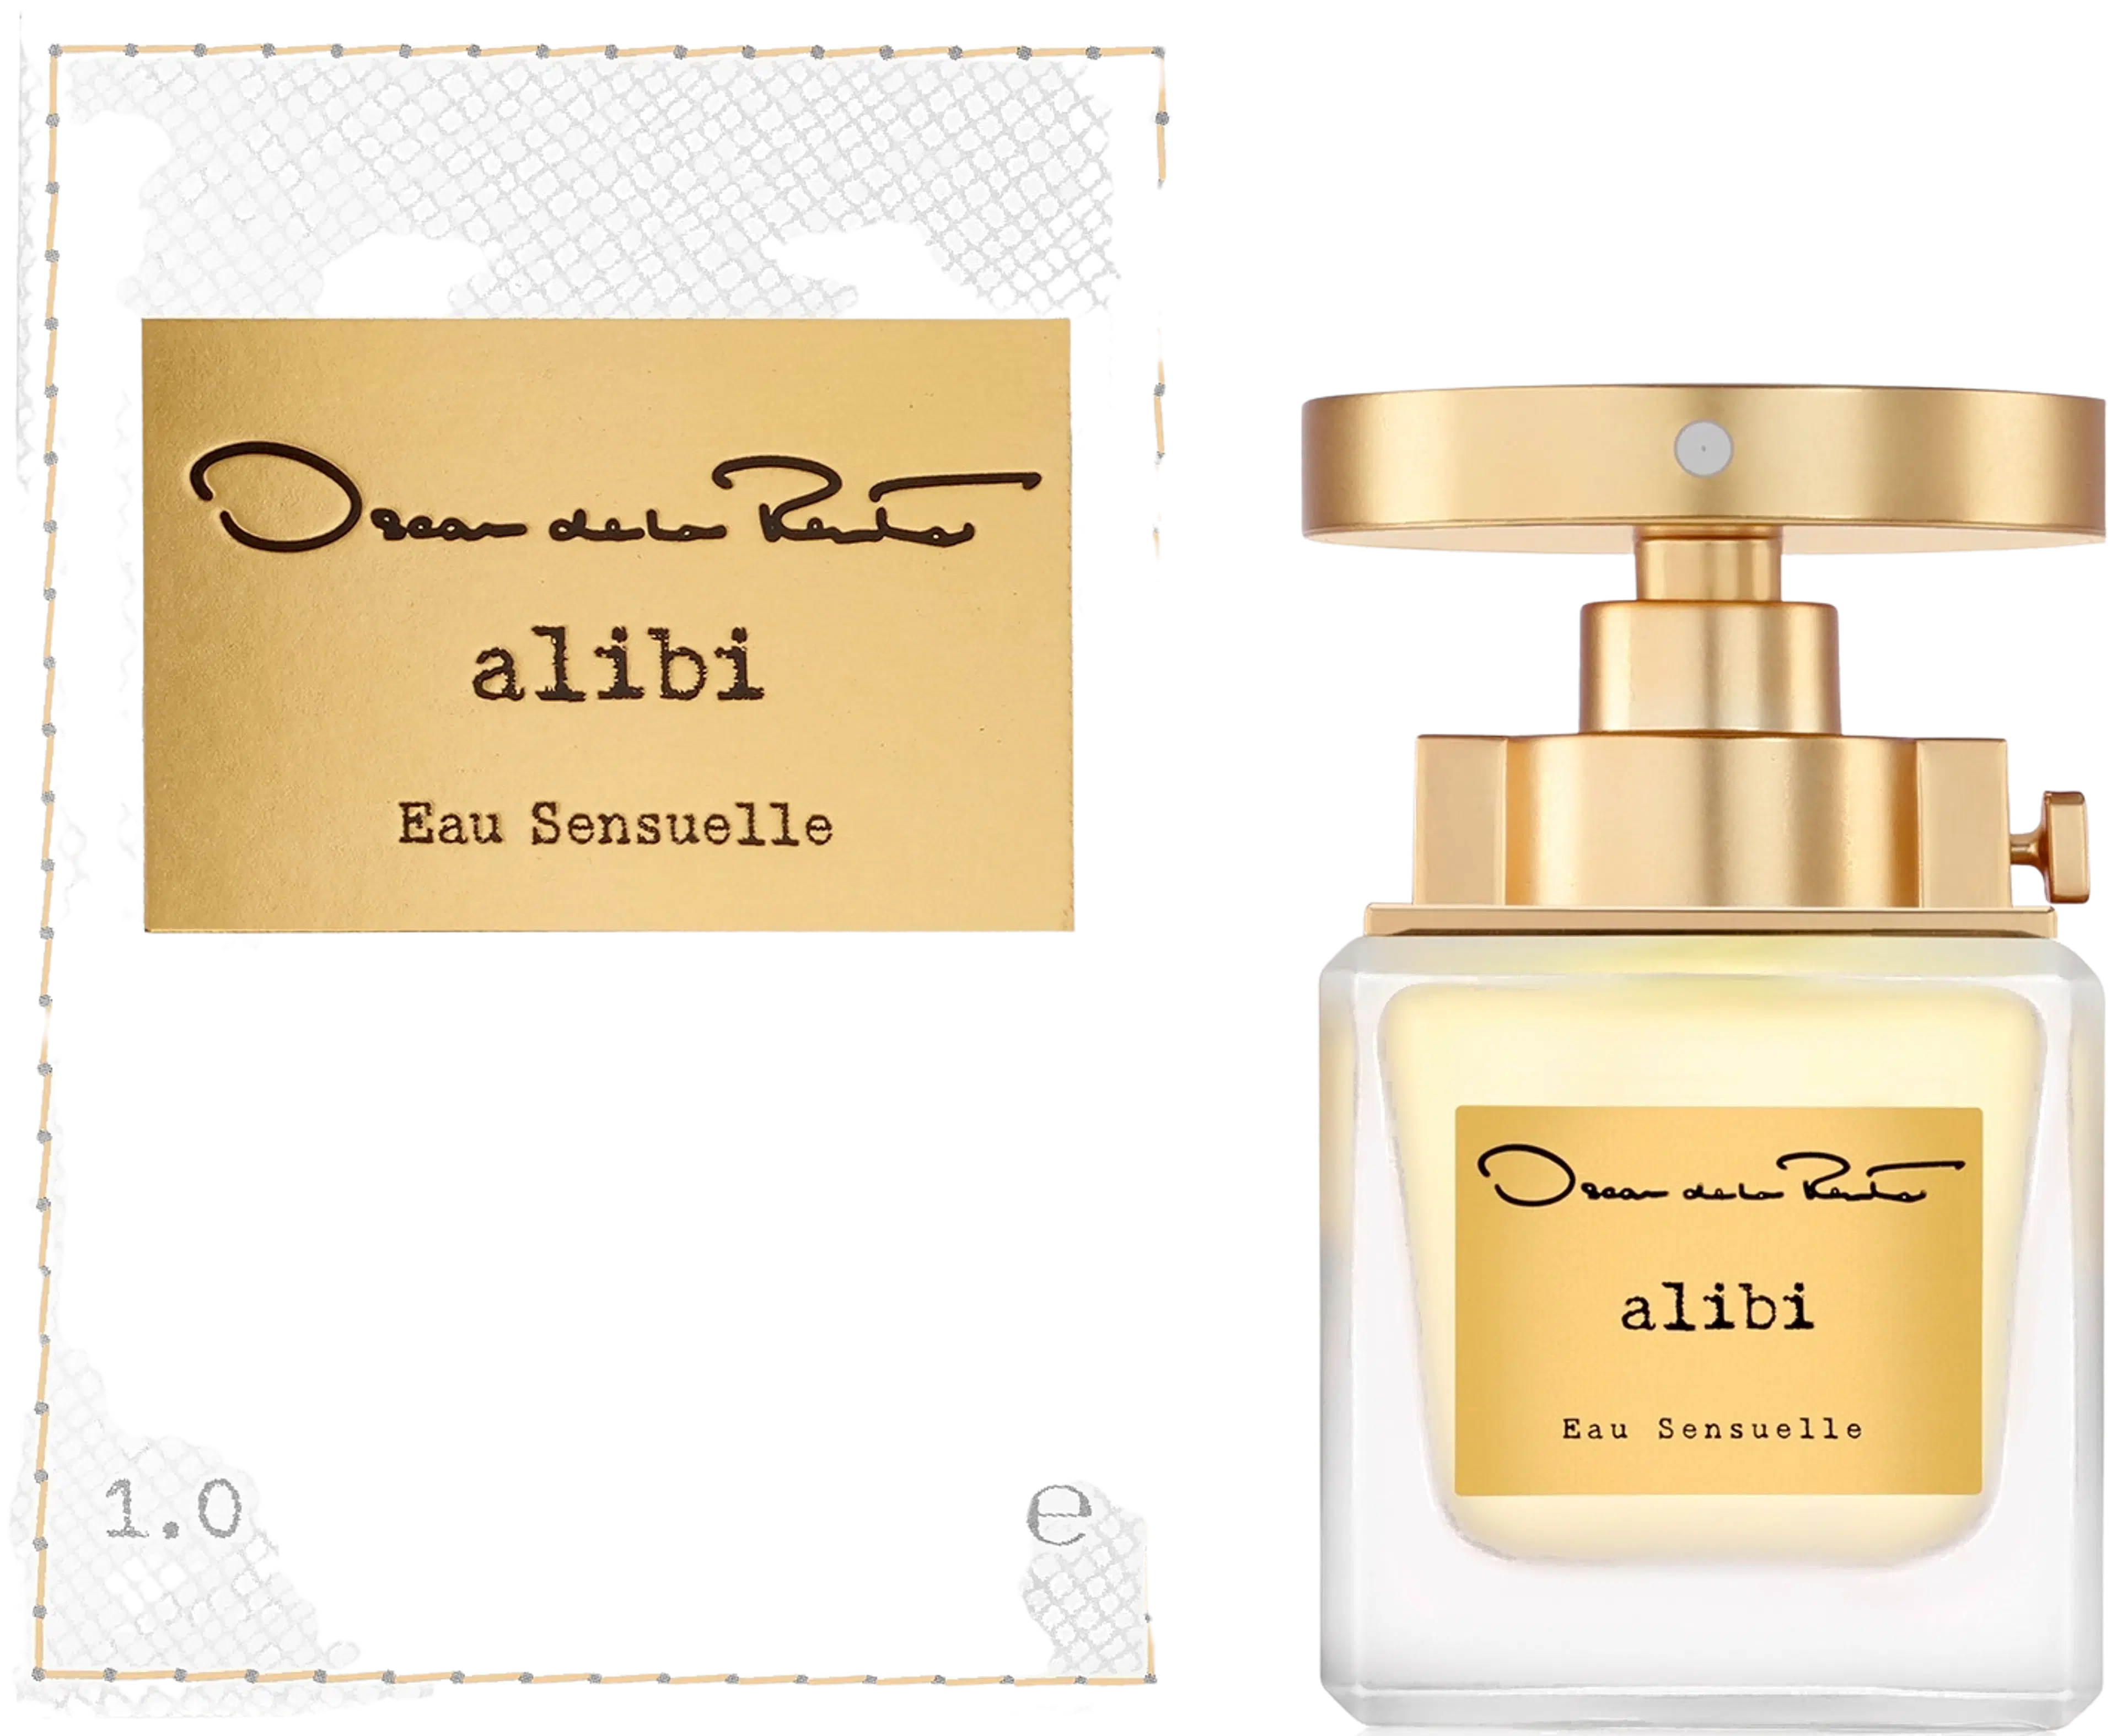 Oscar de la Renta Alibi Eau Sensuelle Eau de Parfum 30ml